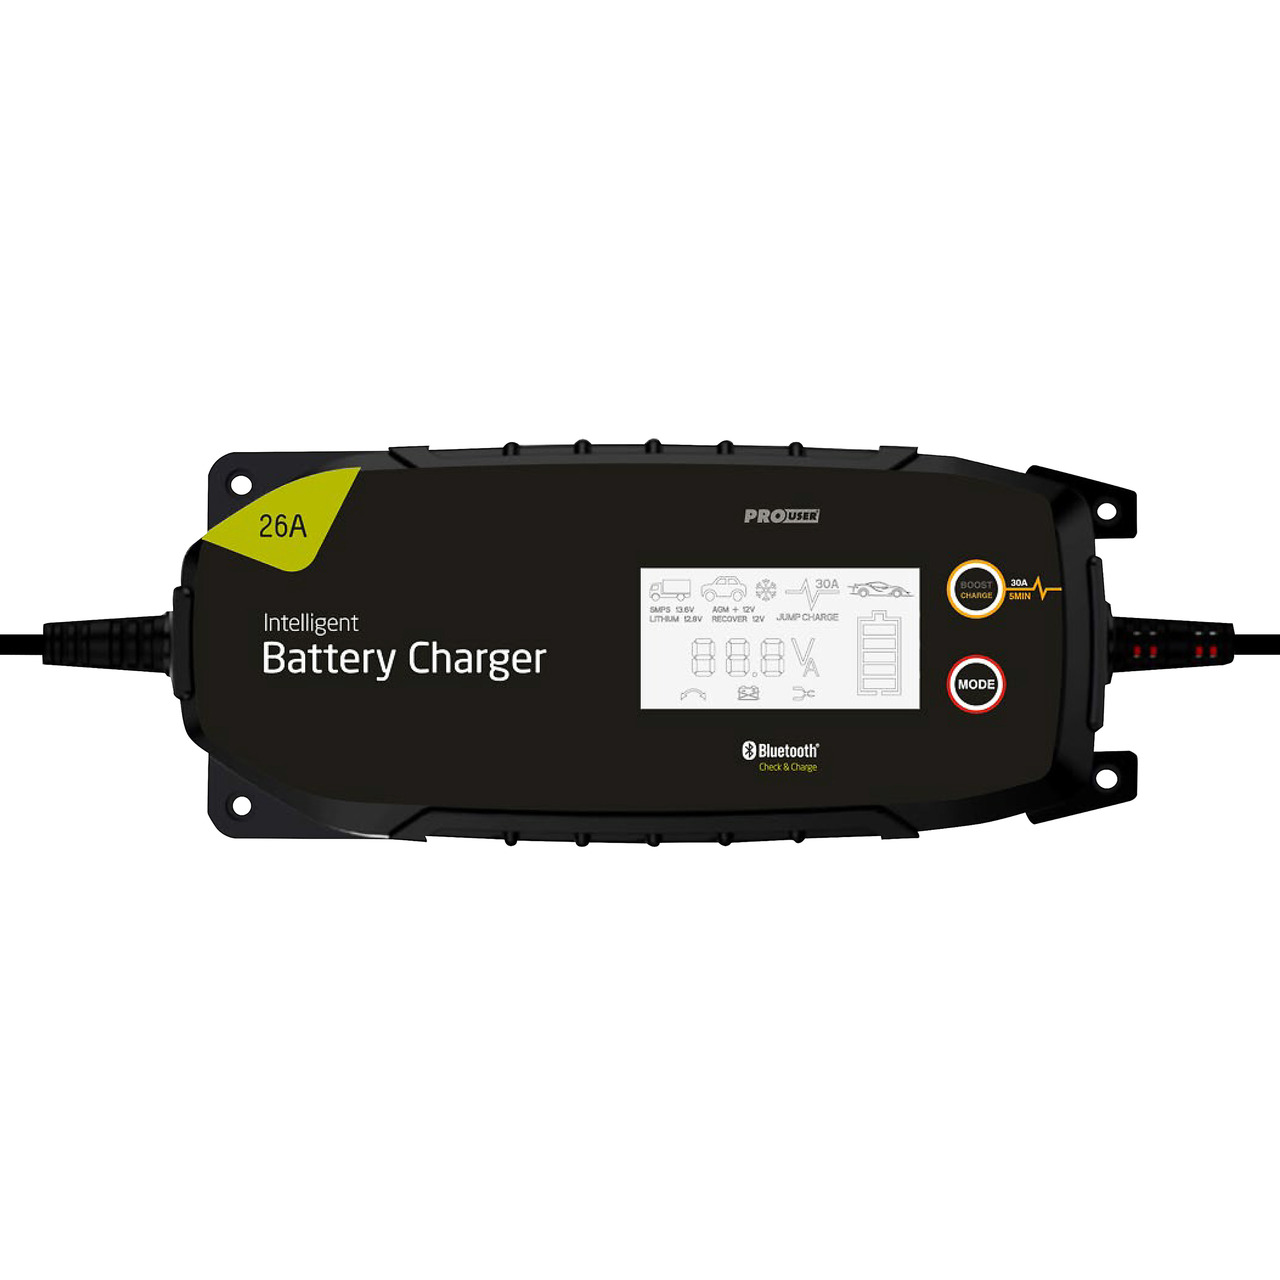 ProUser Kfz-Batterieladegert IBC26000B- 12-24 V- max- 26 A- Bluetooth-Funktion- IP65